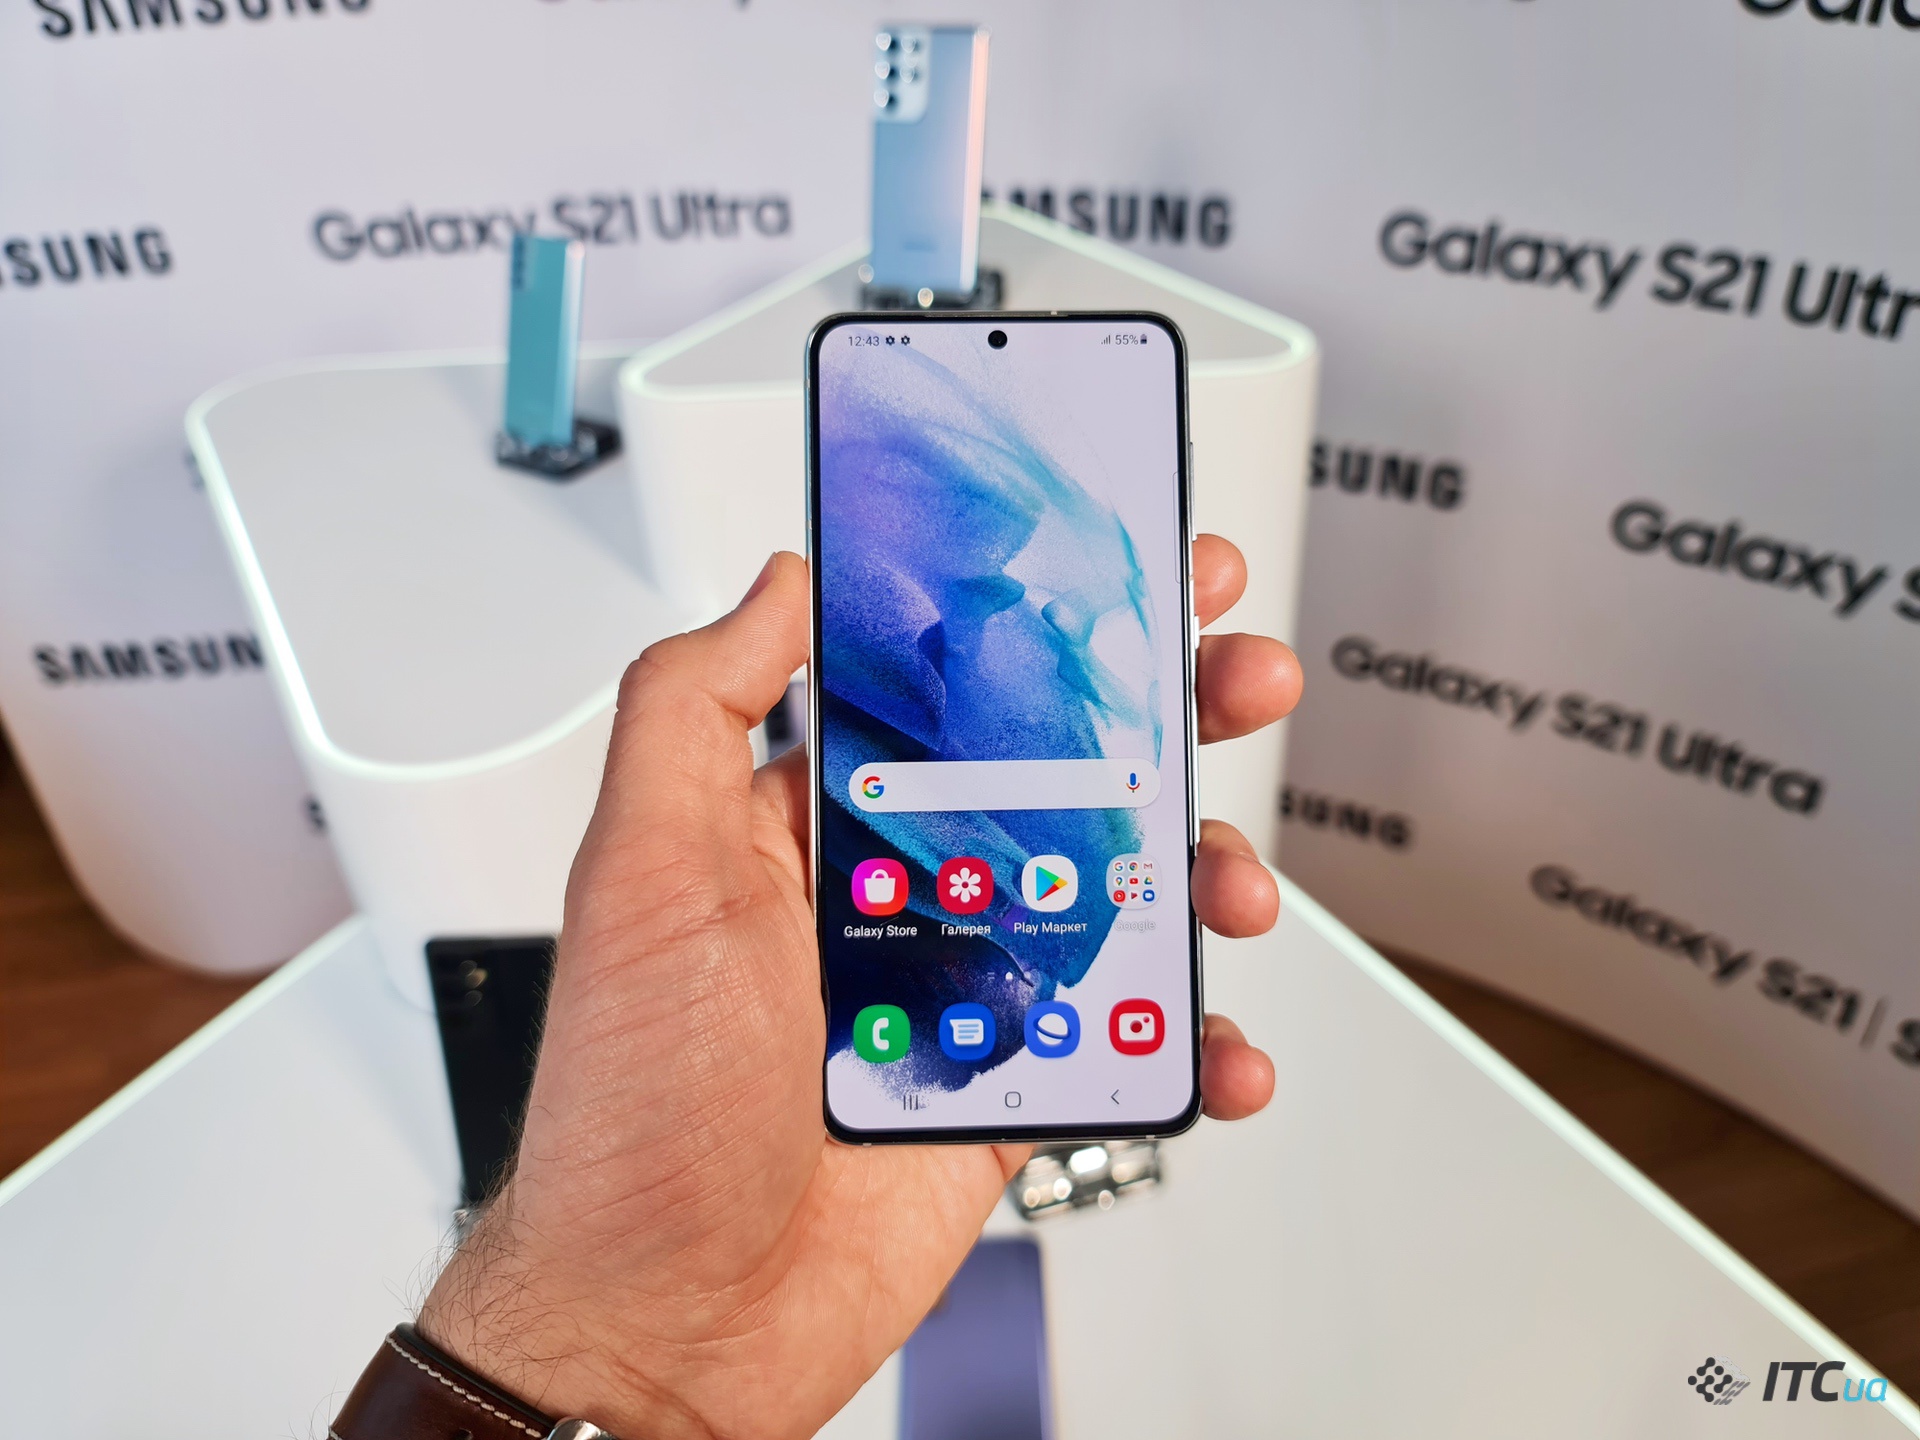 Galaxy S21, S21+ и S21 Ultra - флагманы Samsung 2021 года